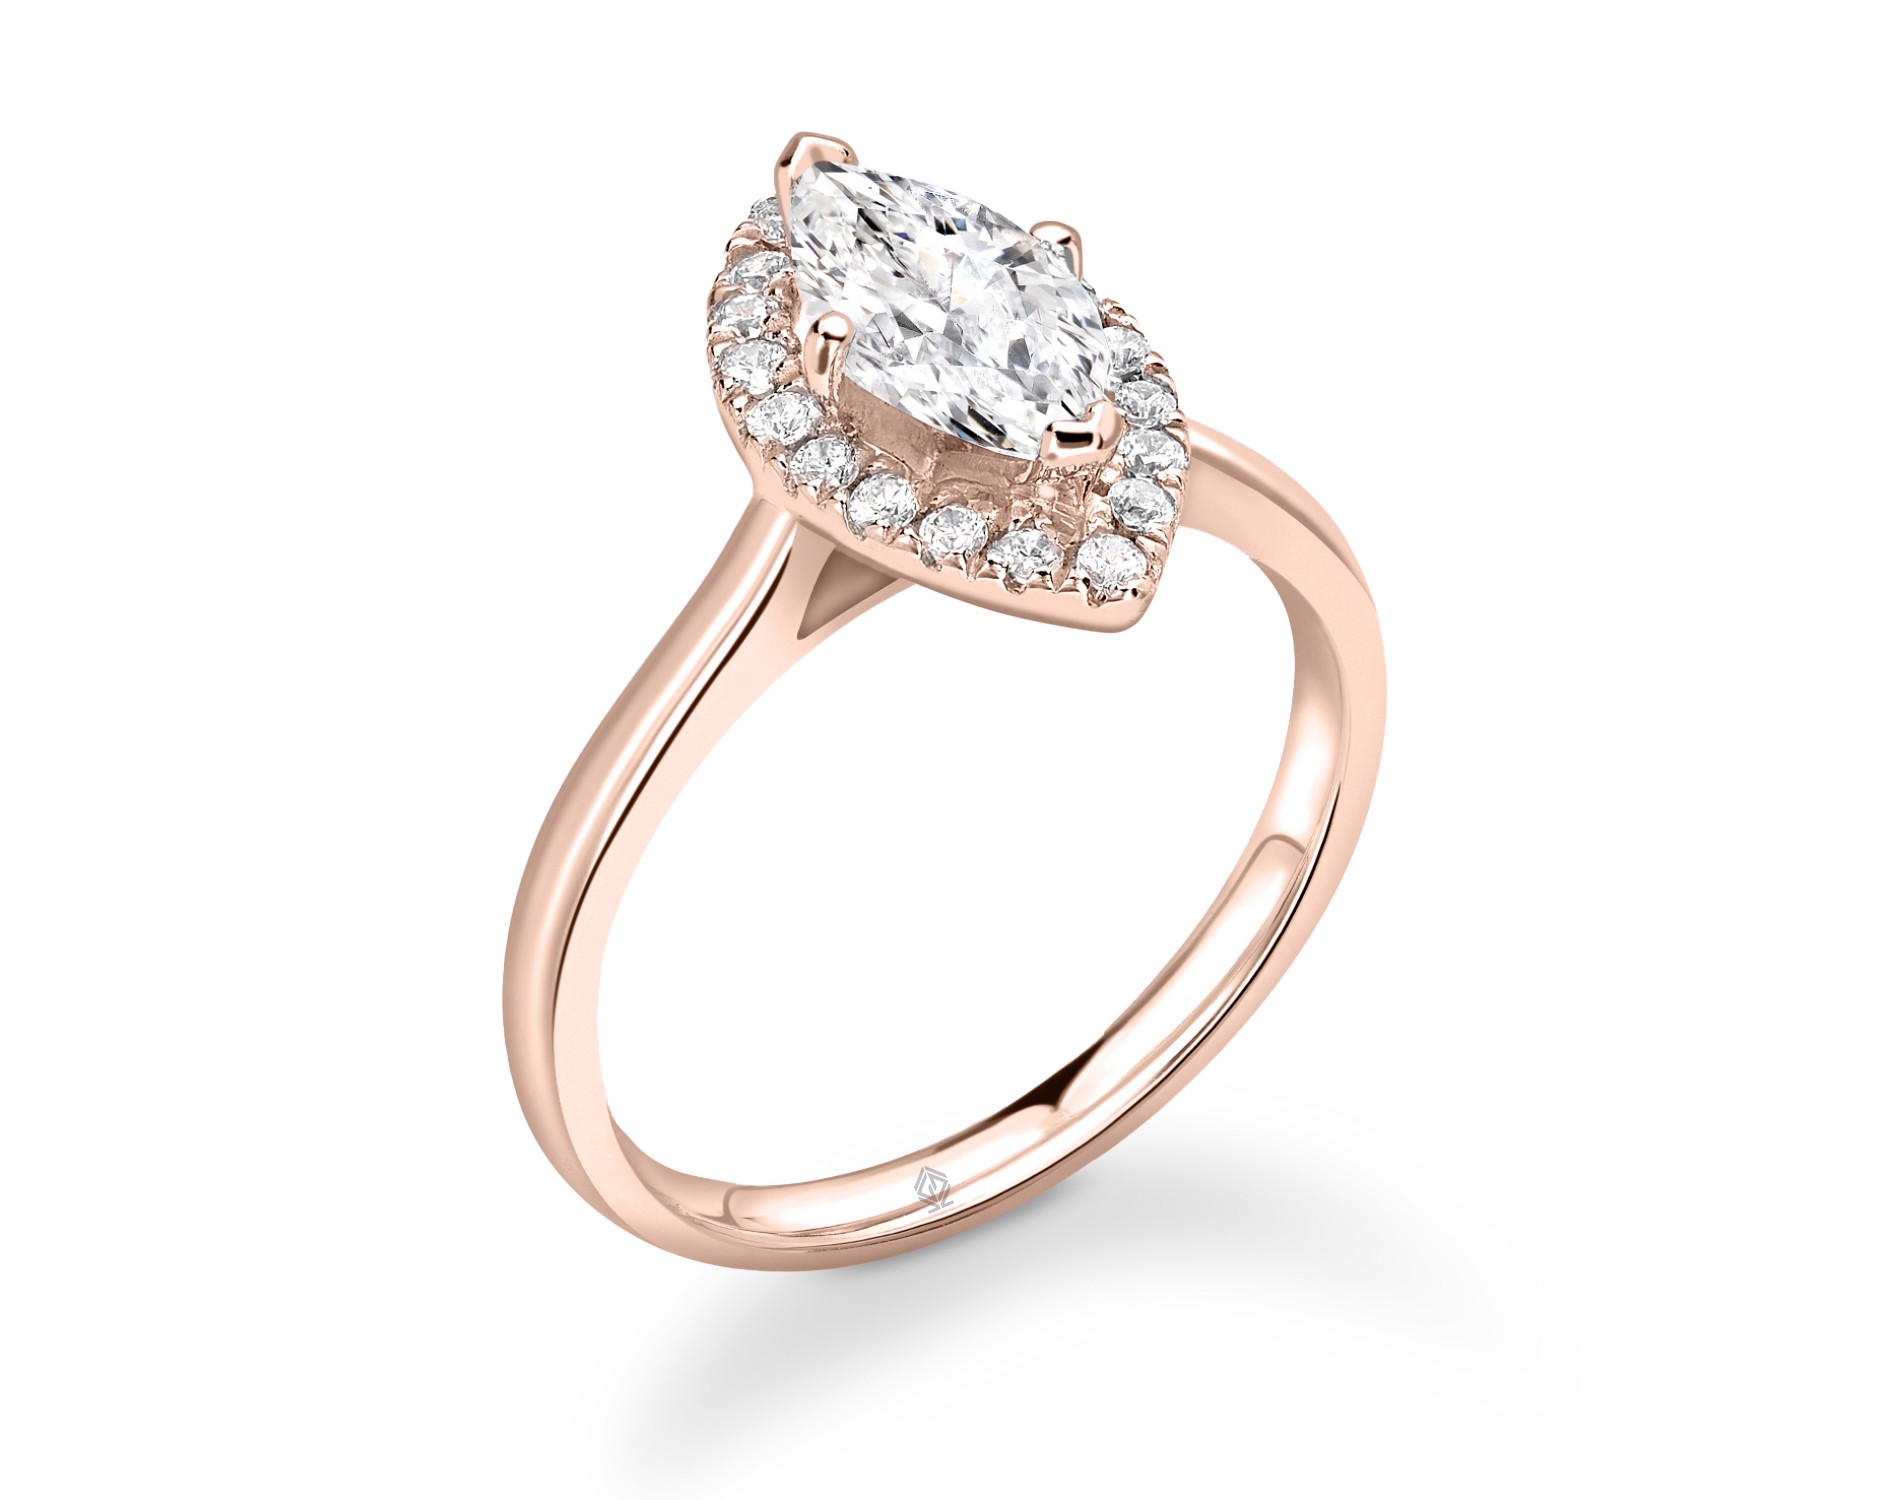 18K ROSE GOLD HALO SET MARQUISE CUT DIAMOND ENGAGEMENT RING